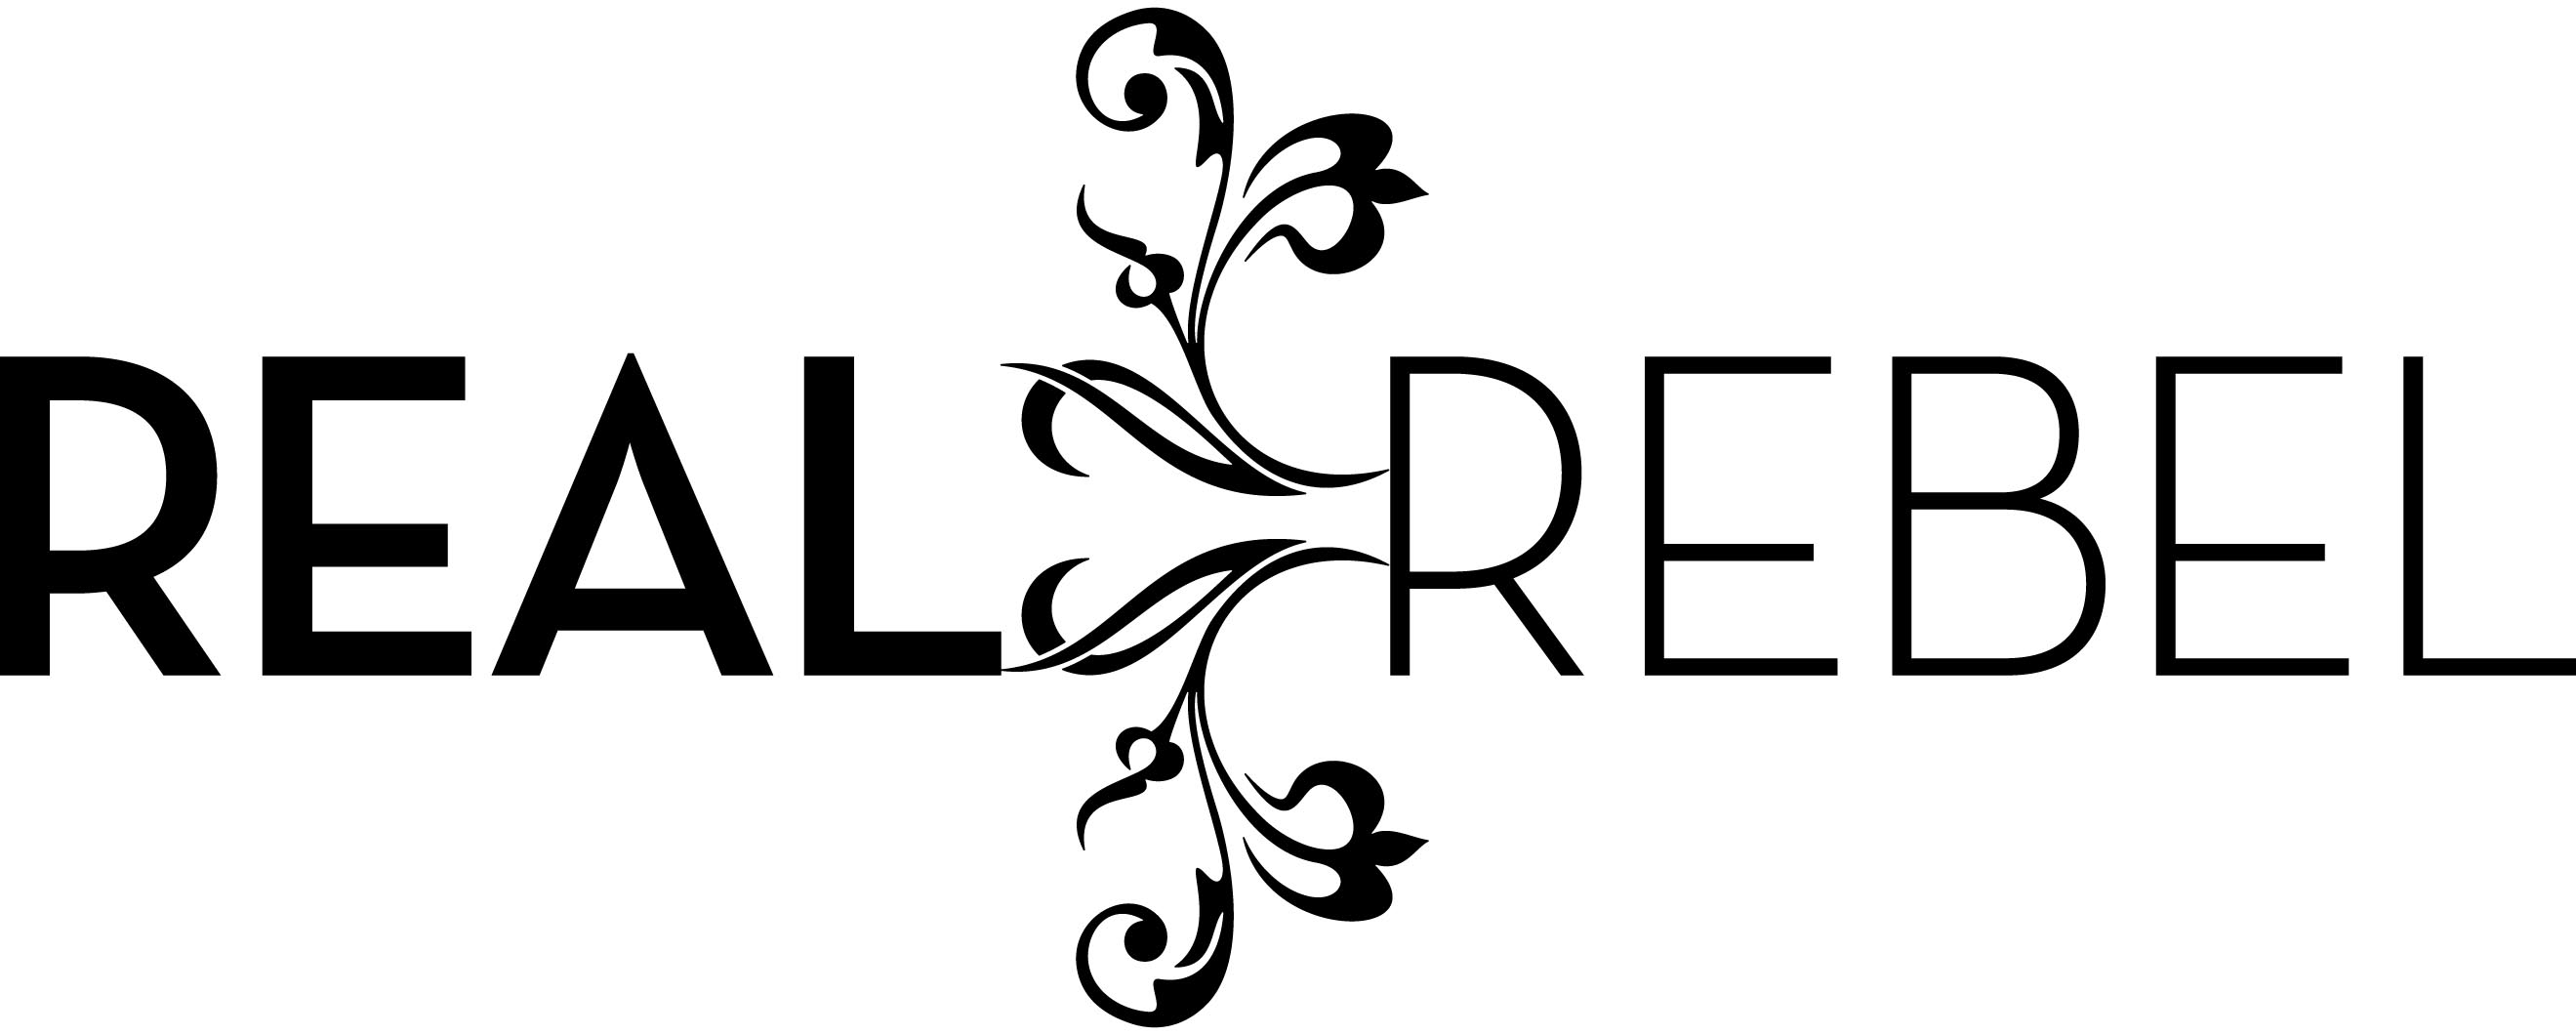 RealRebel Master Logo on White